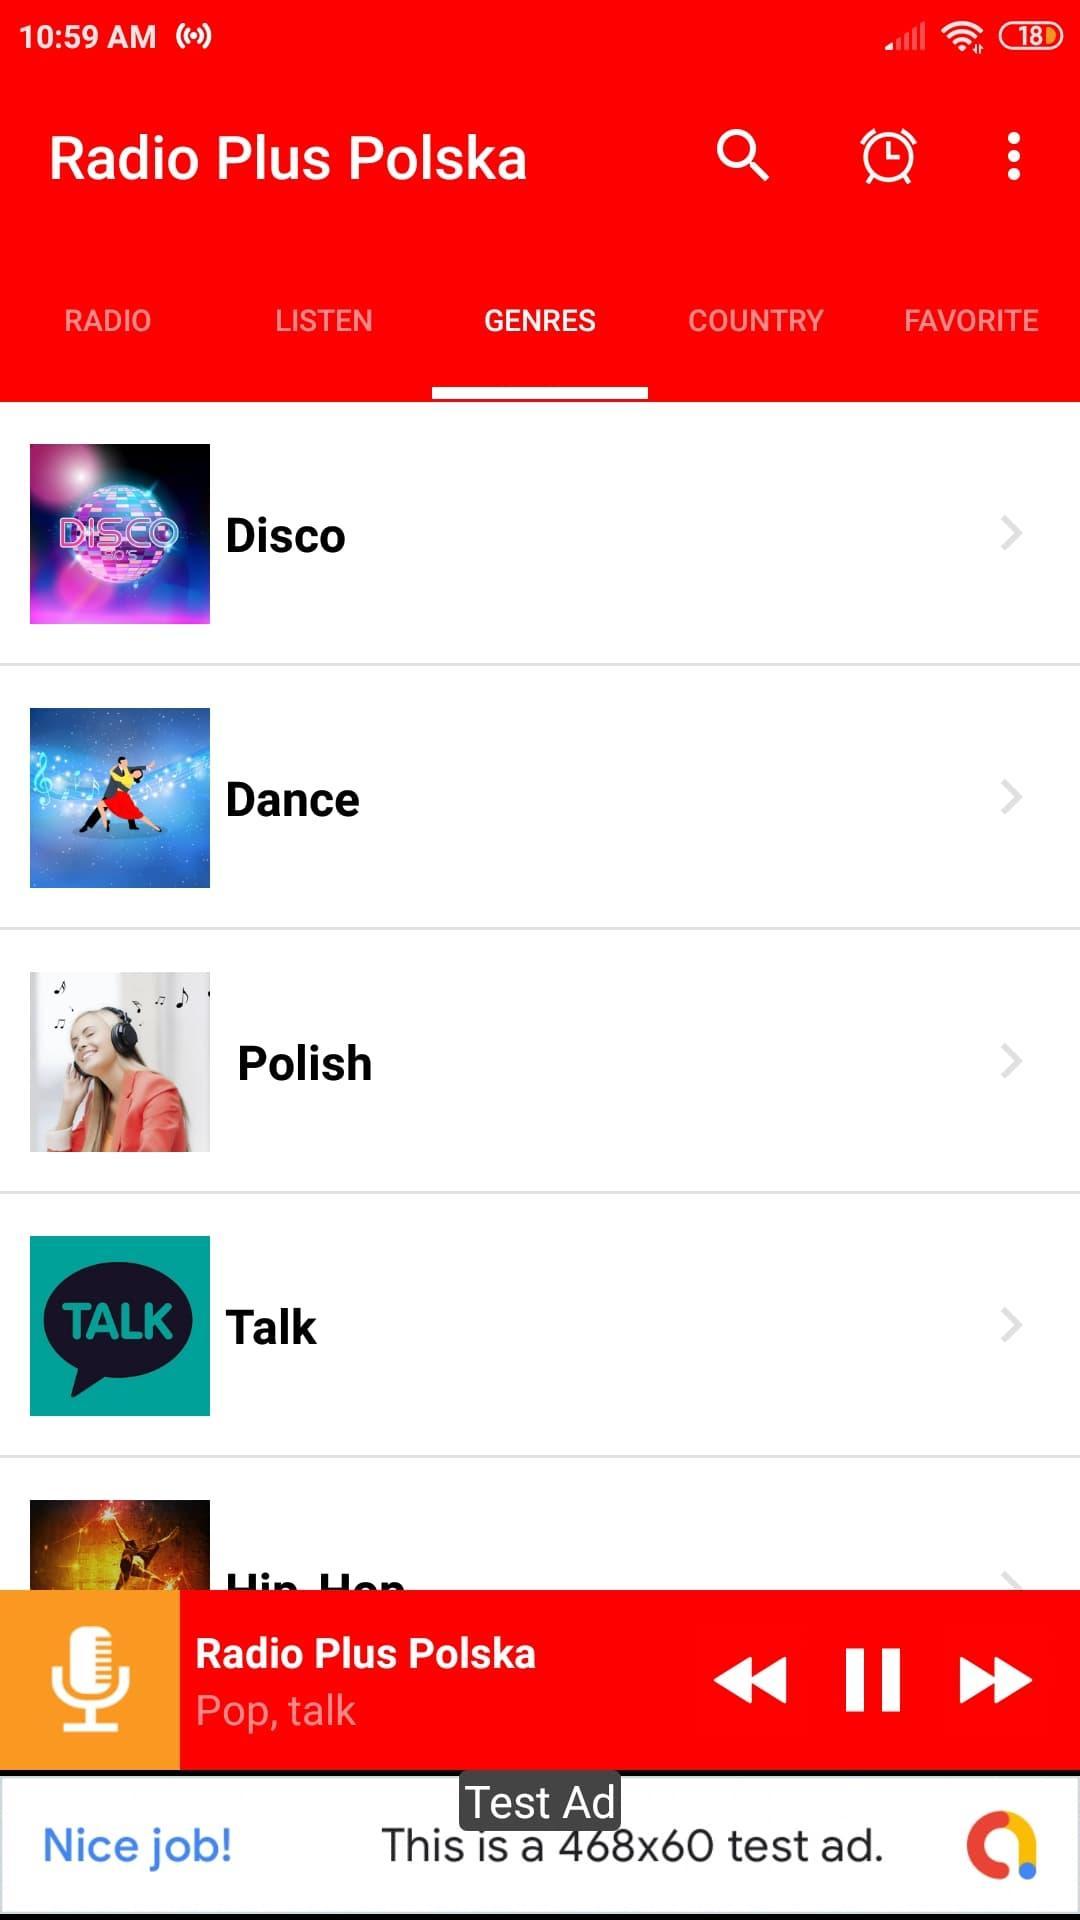 radio plus polska App PL for Android - APK Download